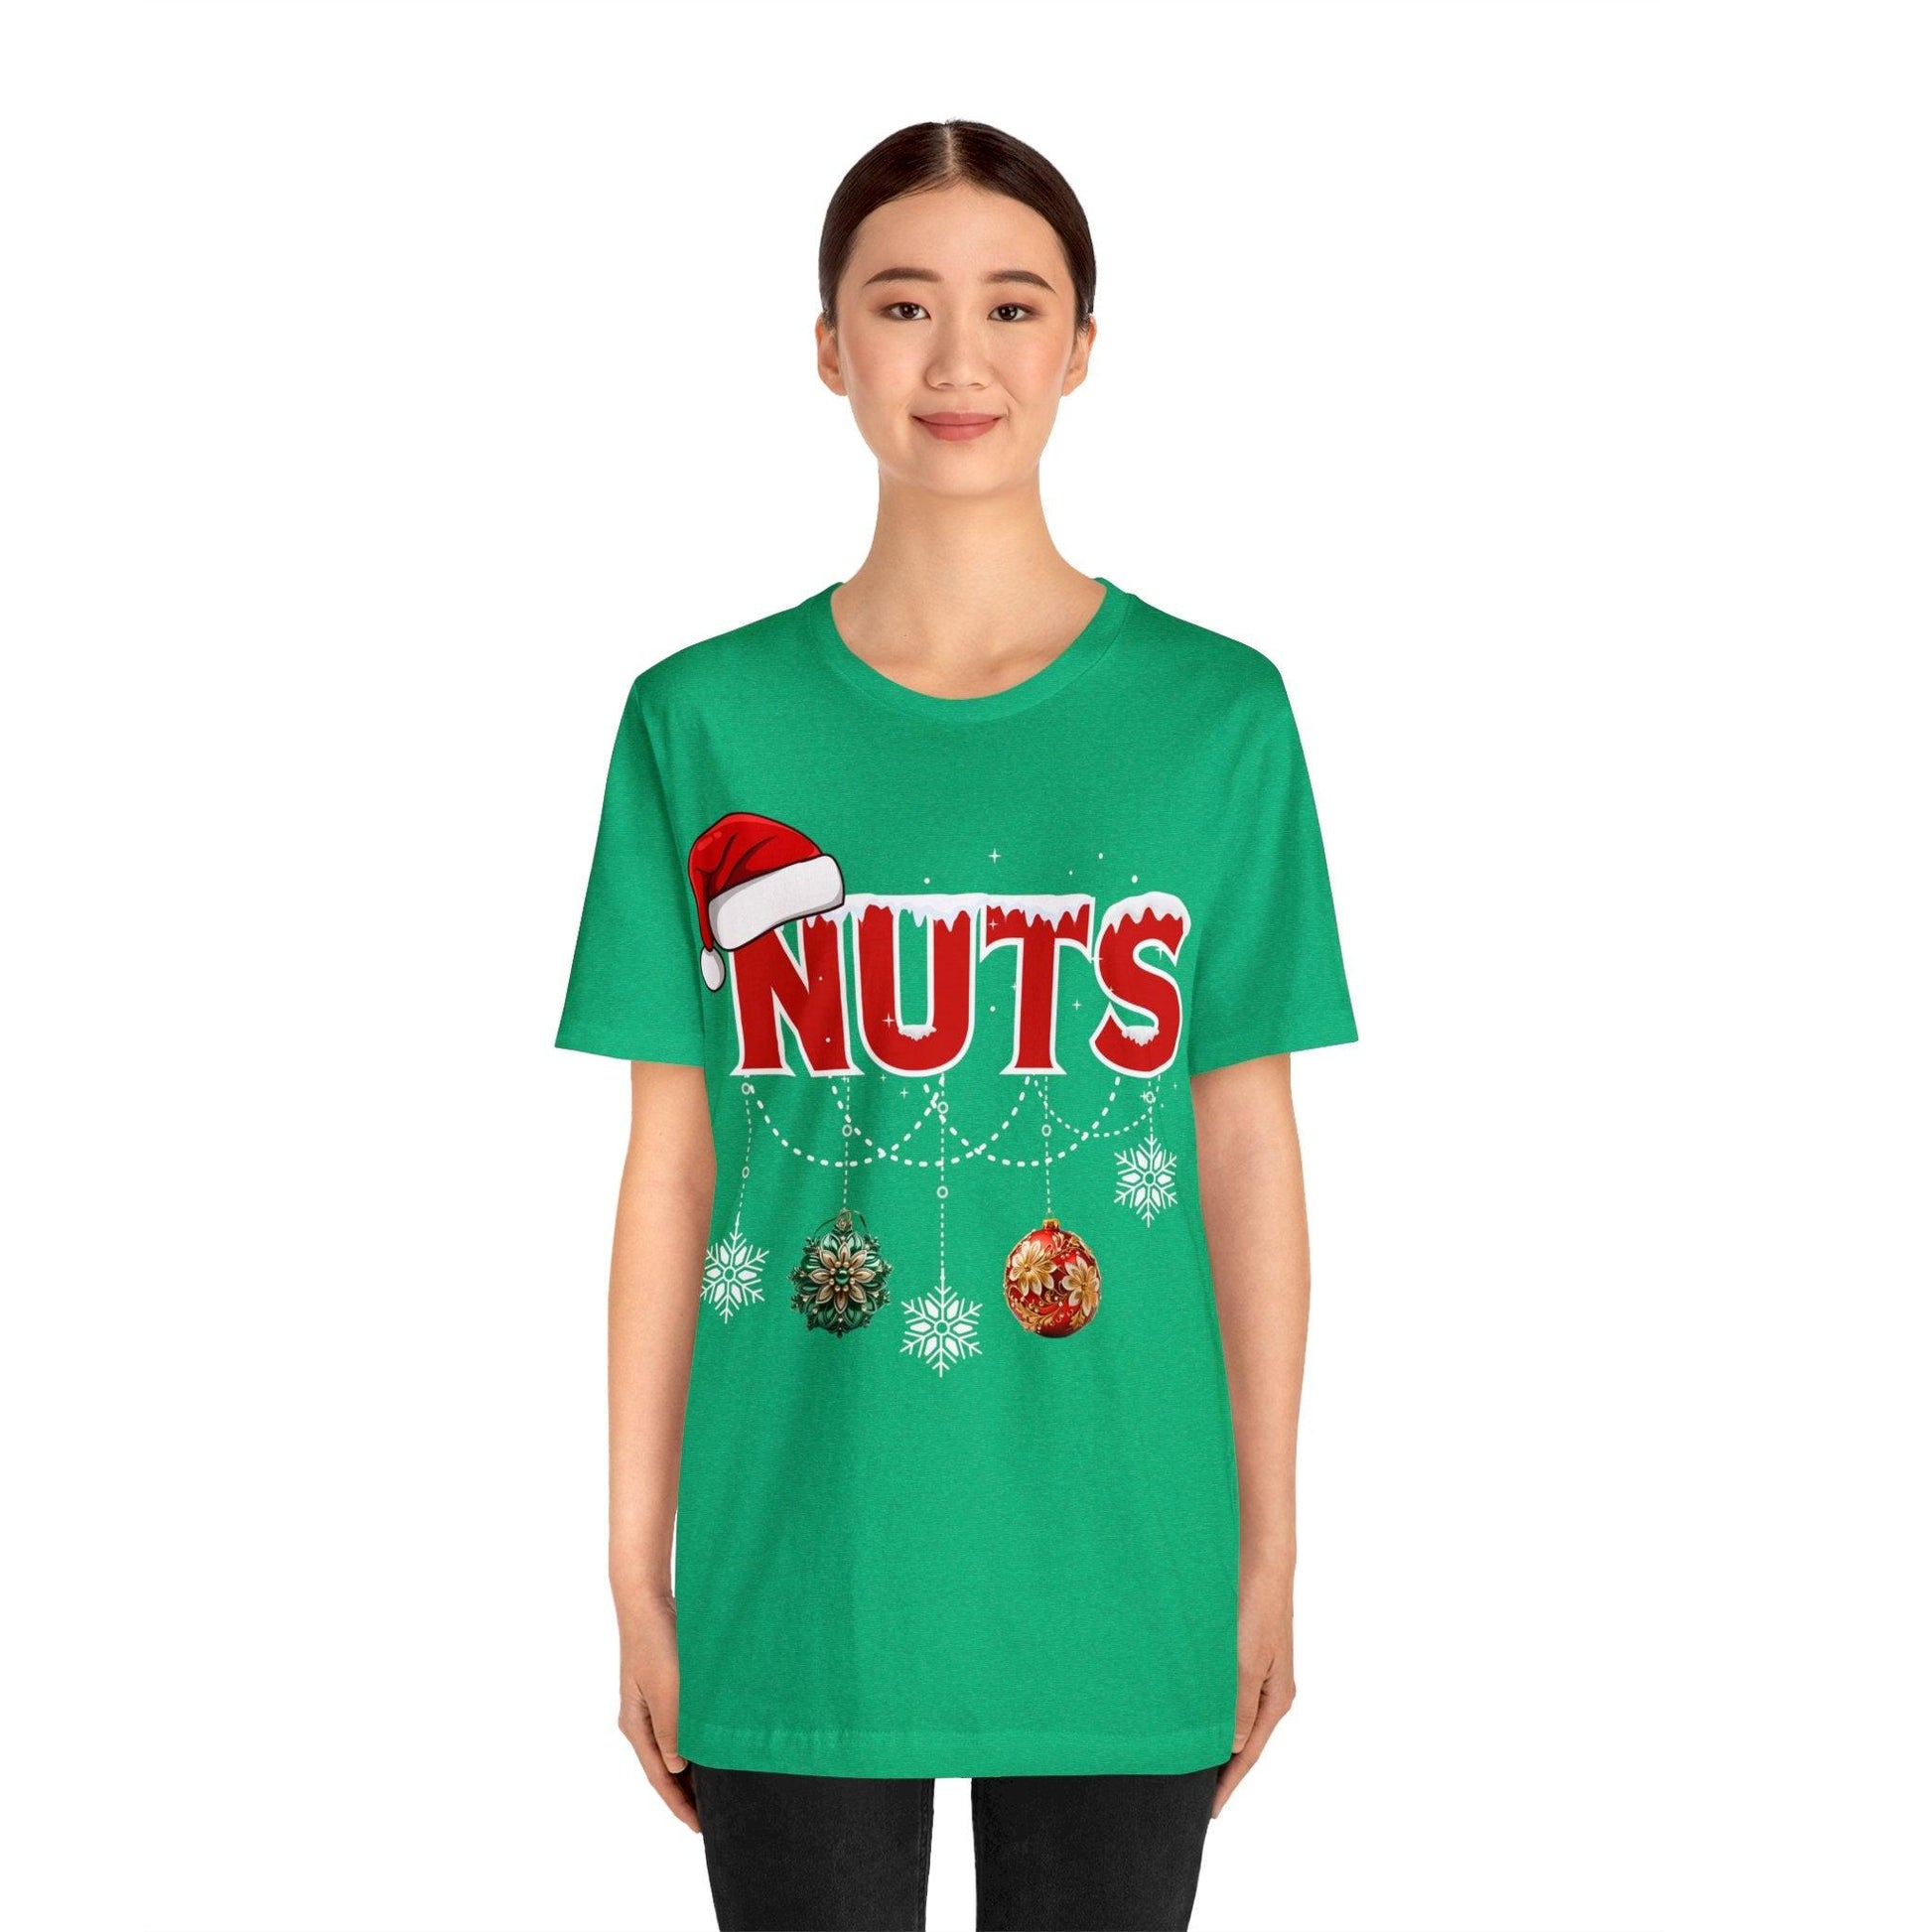 Funny Christmas Matching Shirts Chest Nuts Couples Matching Shirts - Giftsmojo